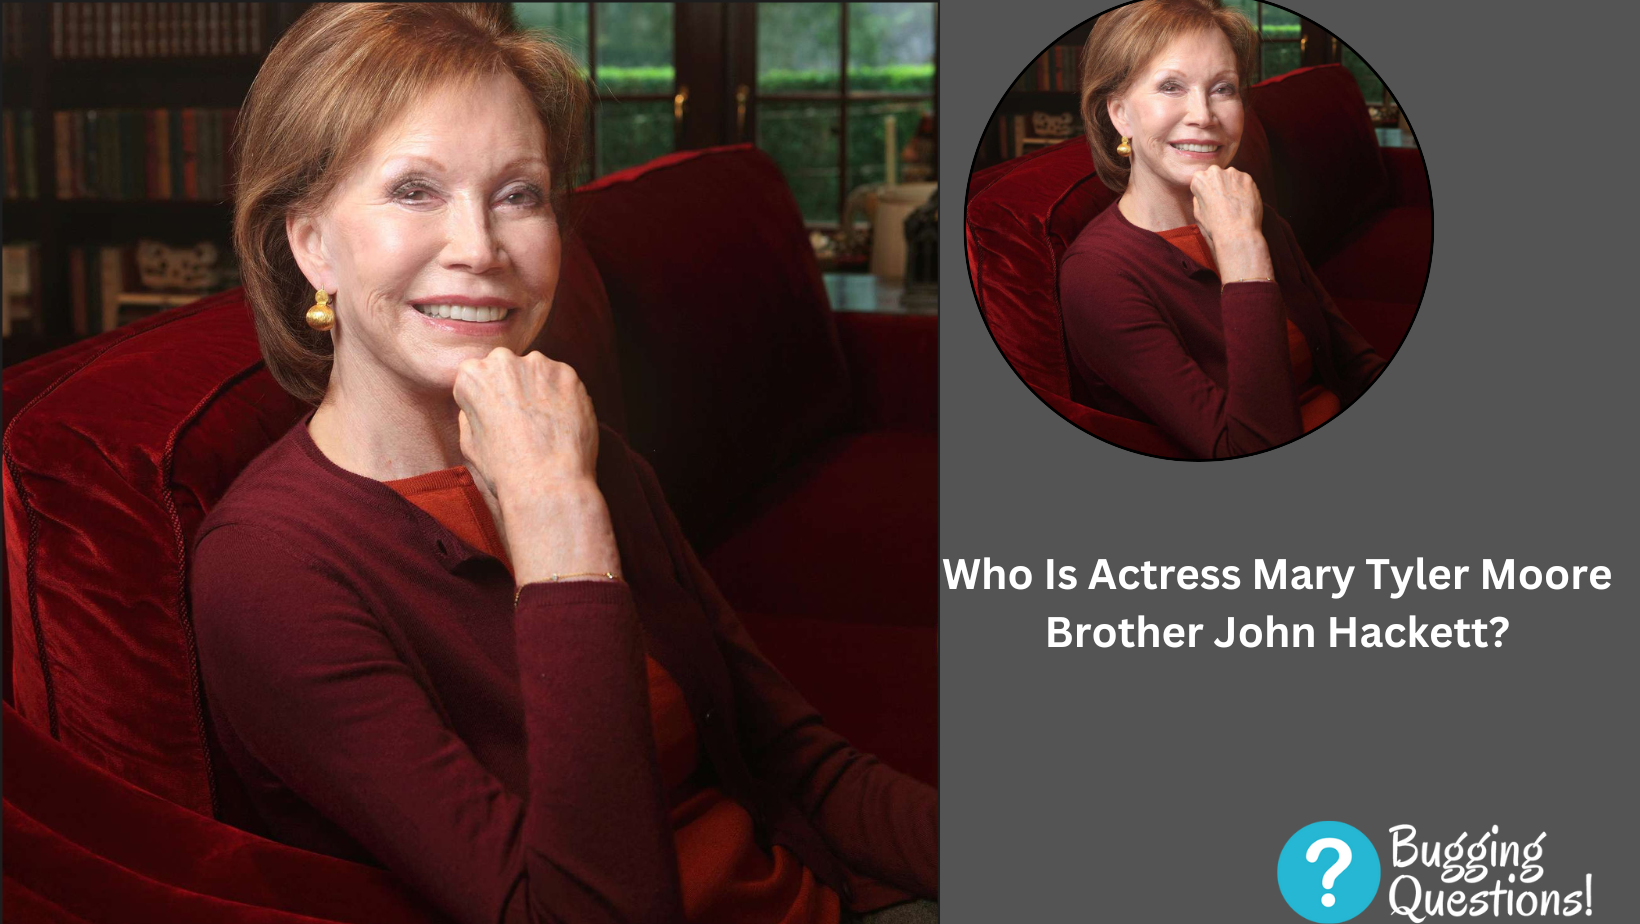 Who Is Actress Mary Tyler Moore Brother John Hackett?